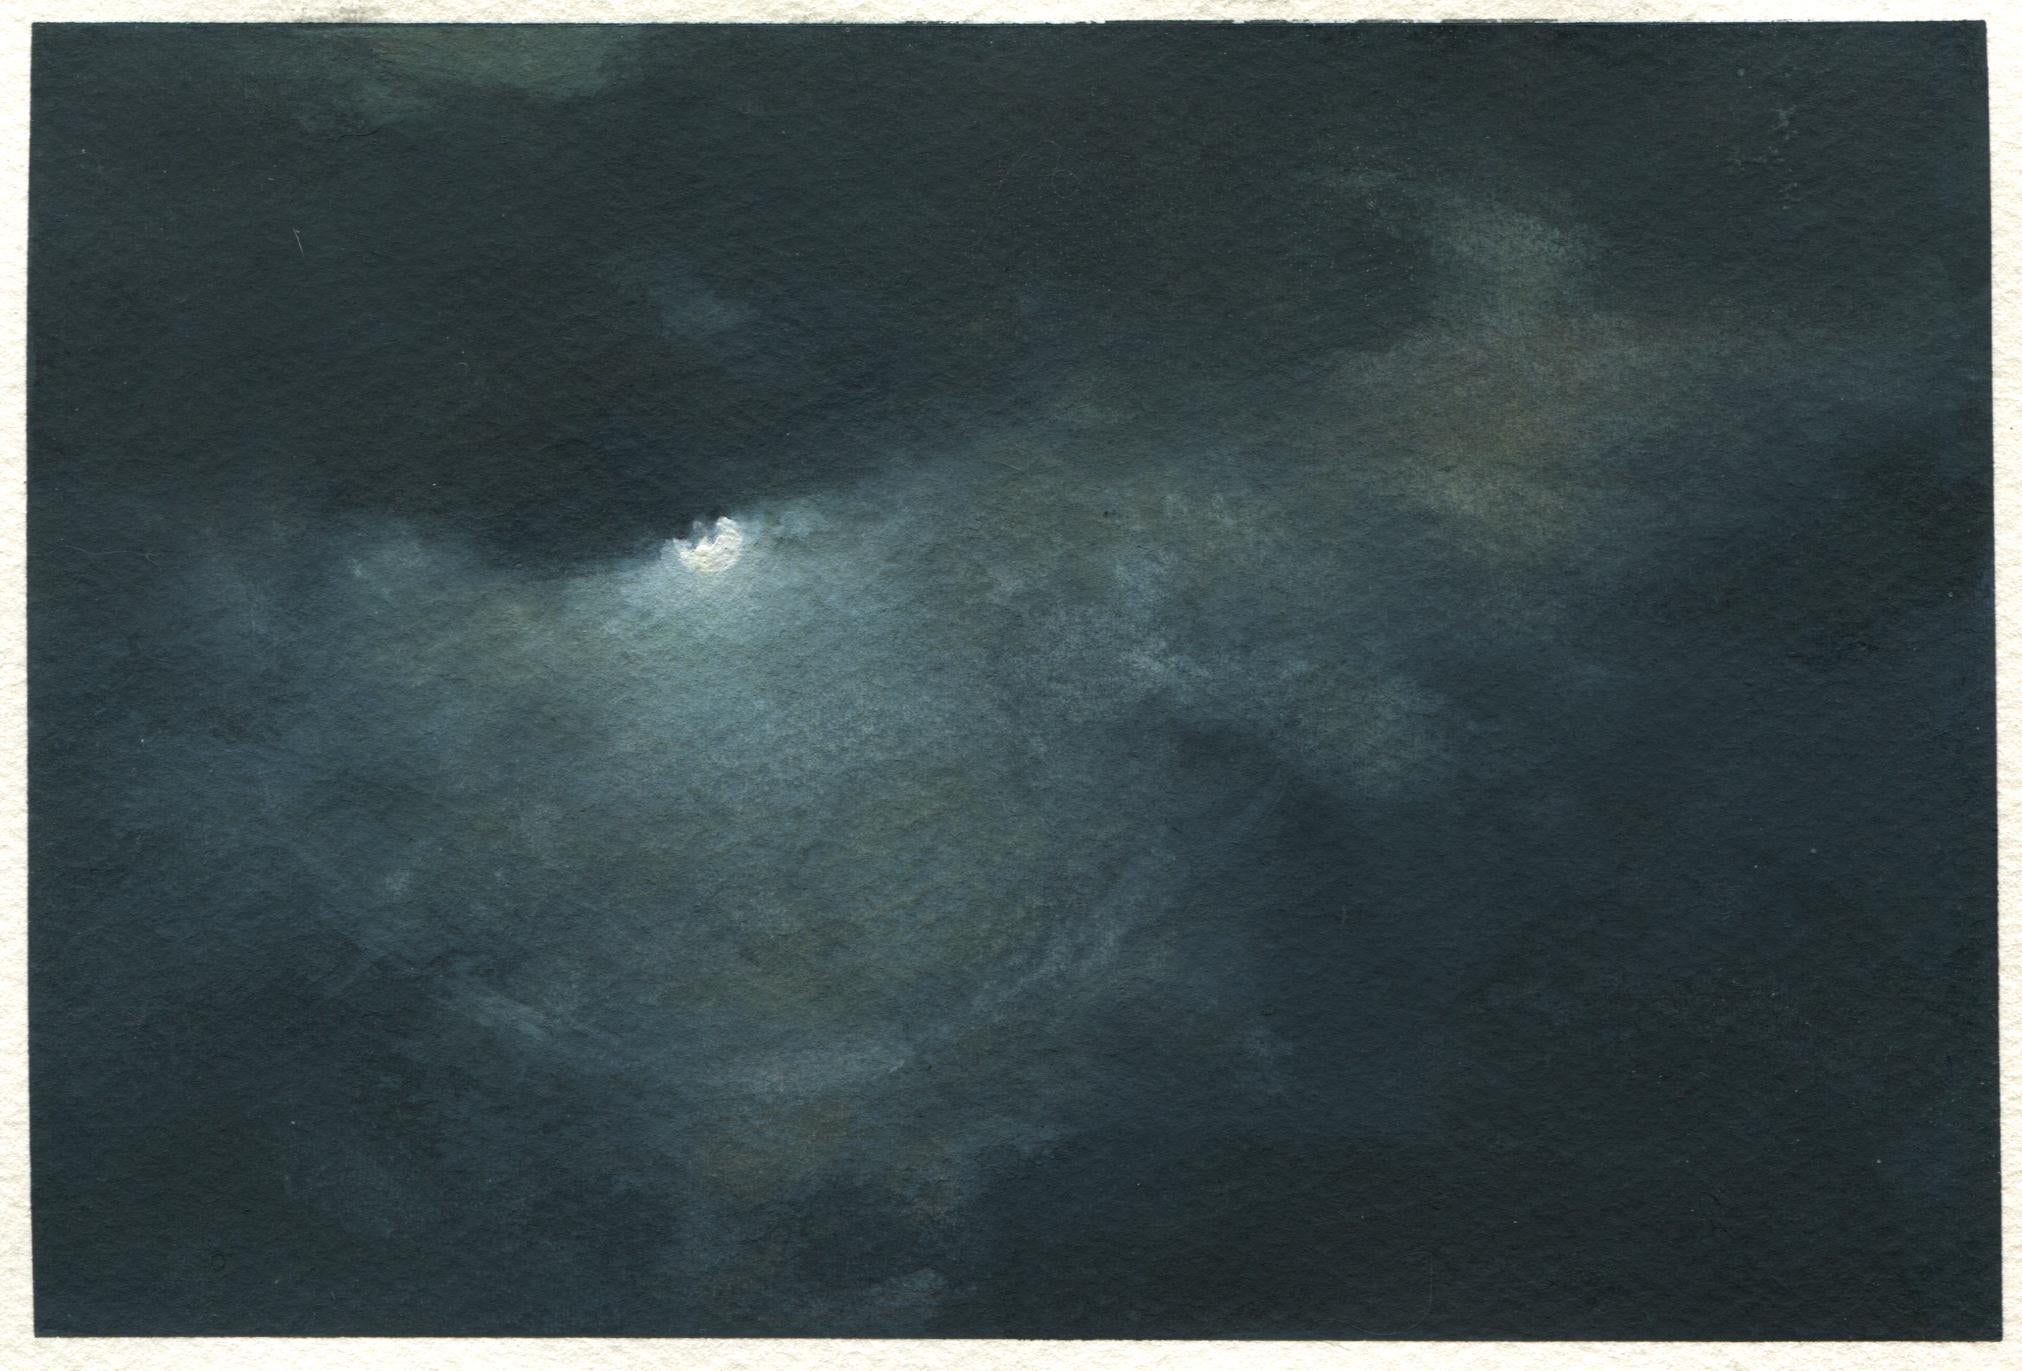 Dozier Bell Landscape Art - Moon ring, clouds, northeastern seascape watercolor